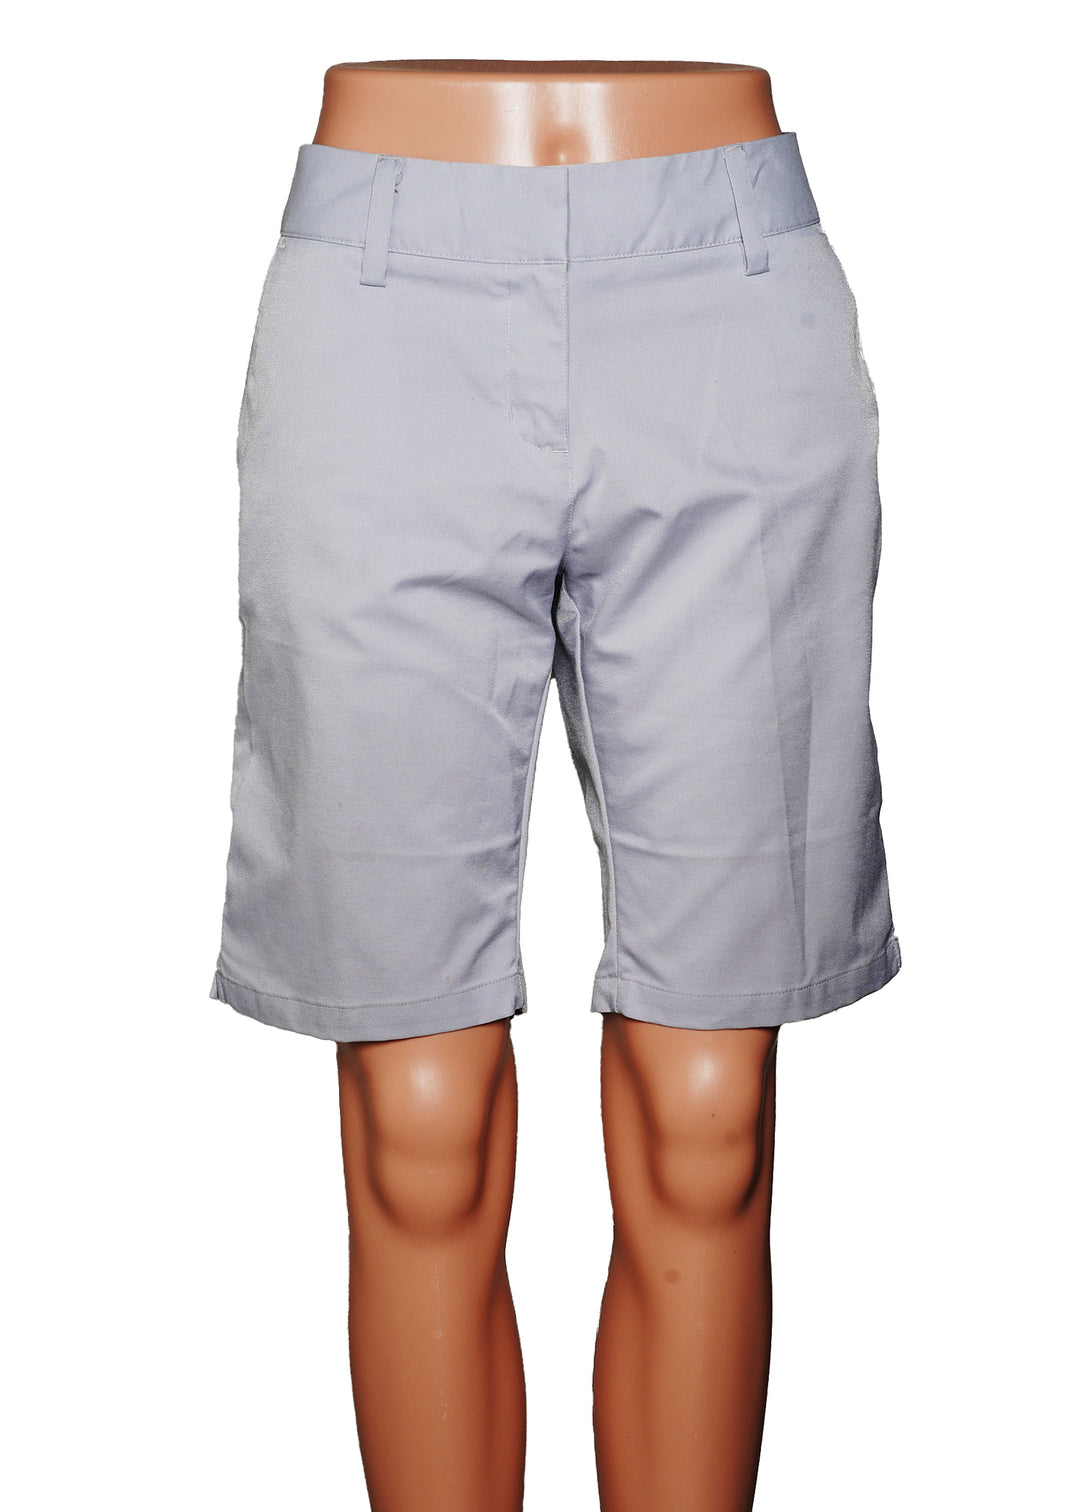 Adidas Bermuda Golf Short - Grey - Size 8 - Skorzie